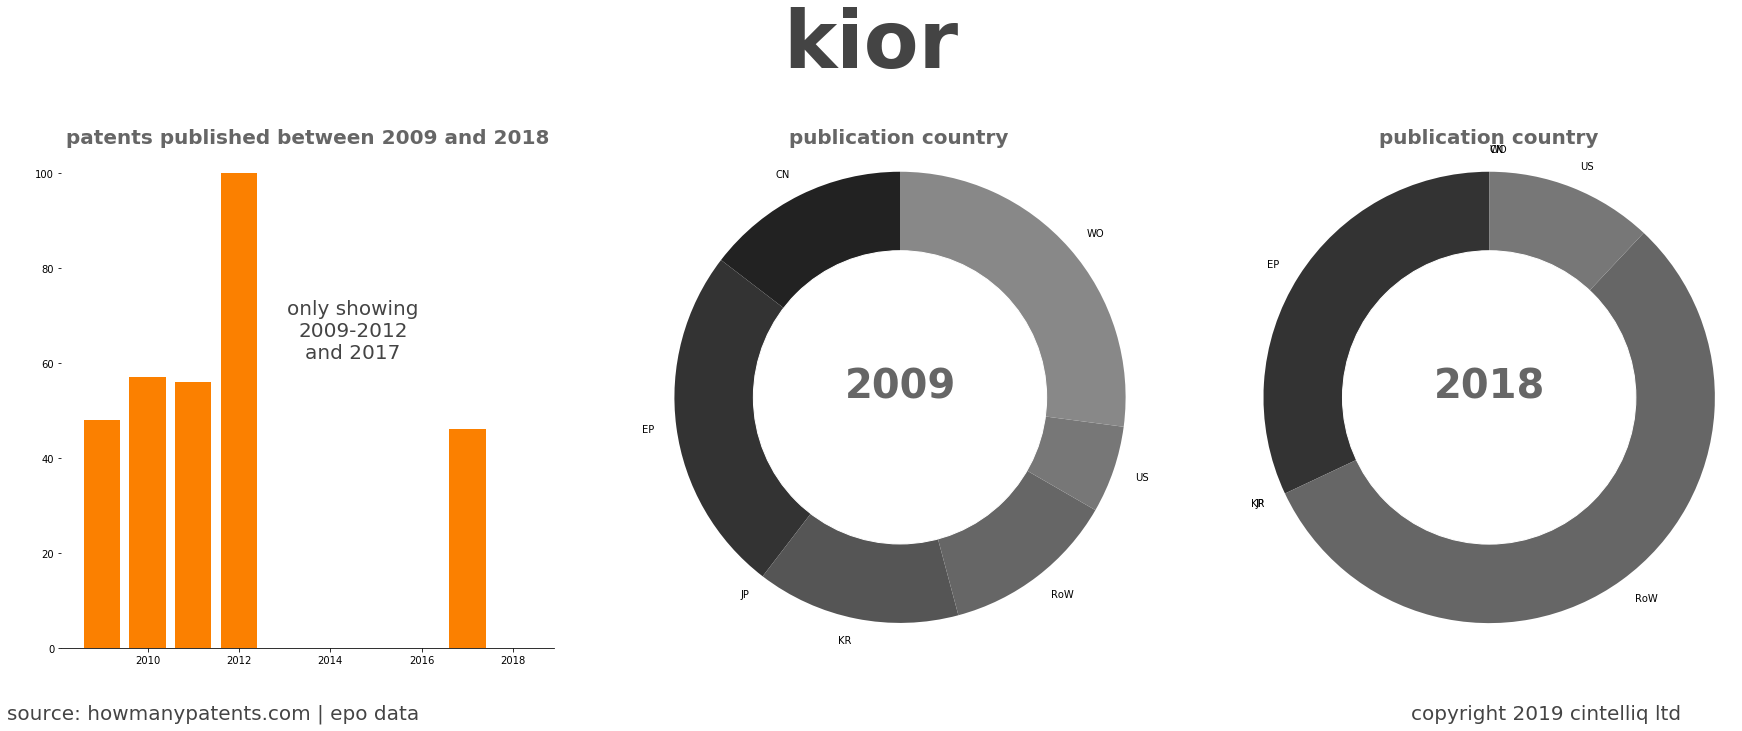 summary of patents for Kior